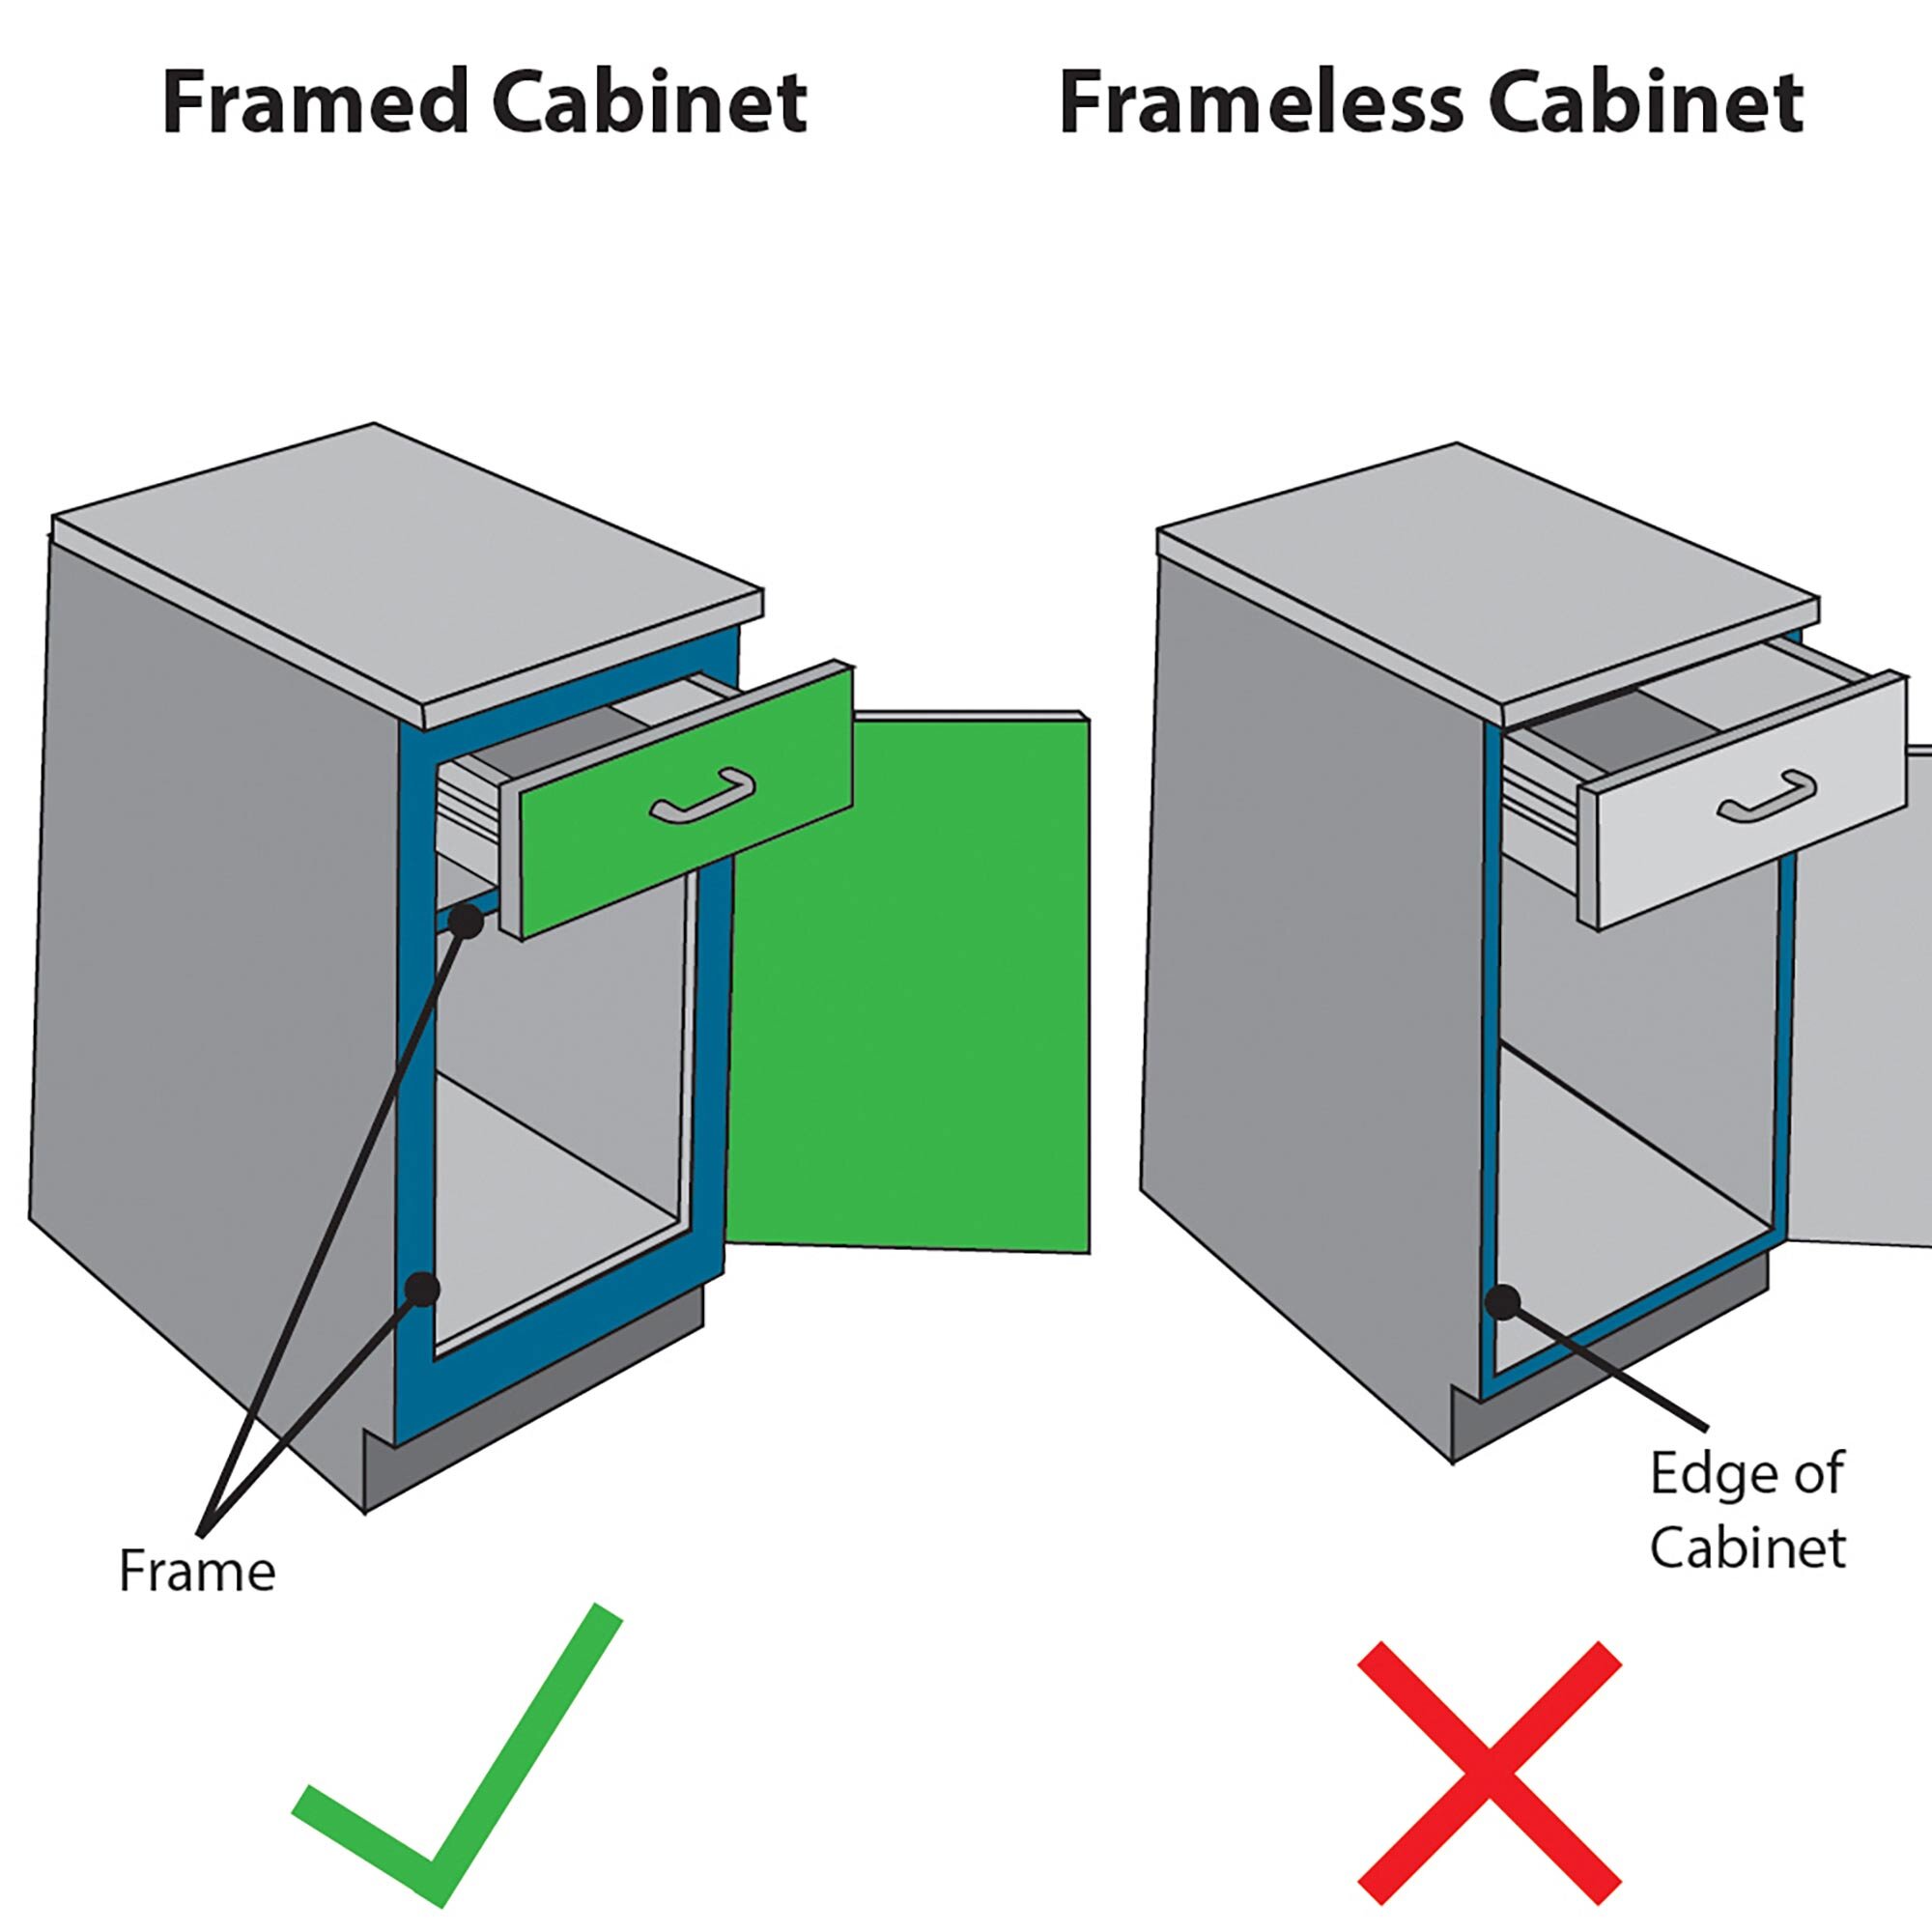 Adhesive Magnet Lock works for framed cabinets, not frameless ones